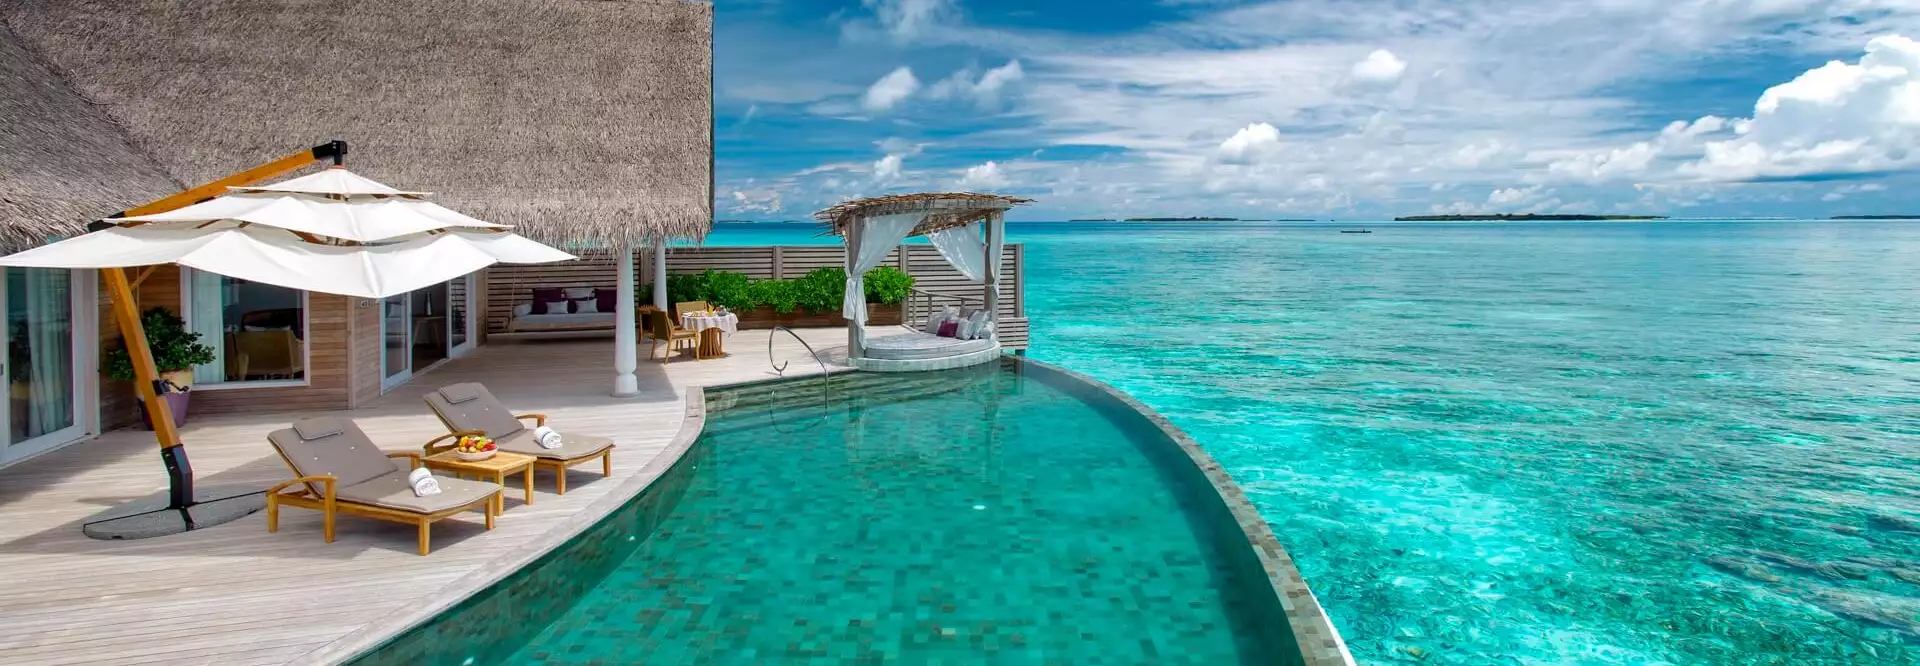 Ocean Residence with Pool - Two Bedroom